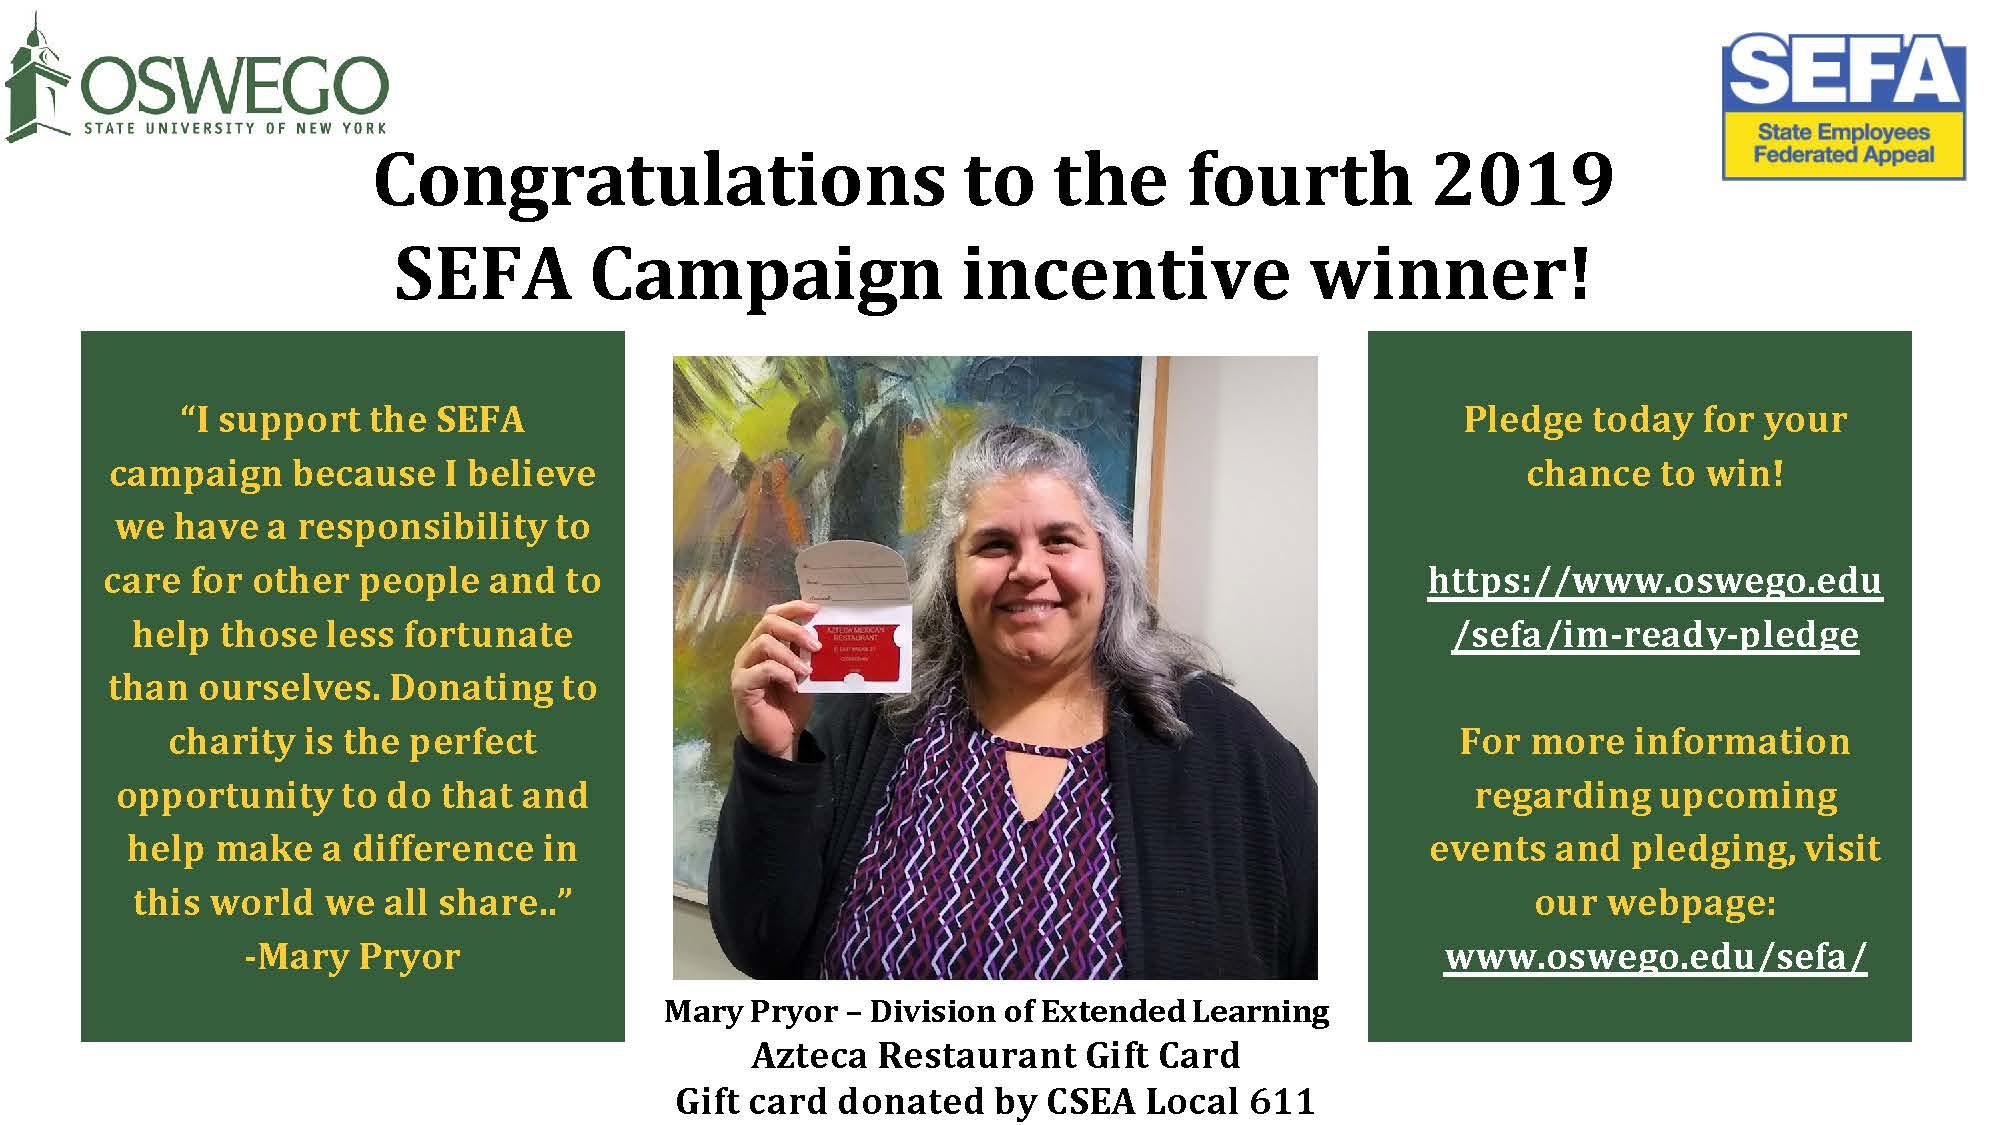 SEFA Incentive Prize Winner #4 - Mary Pryor